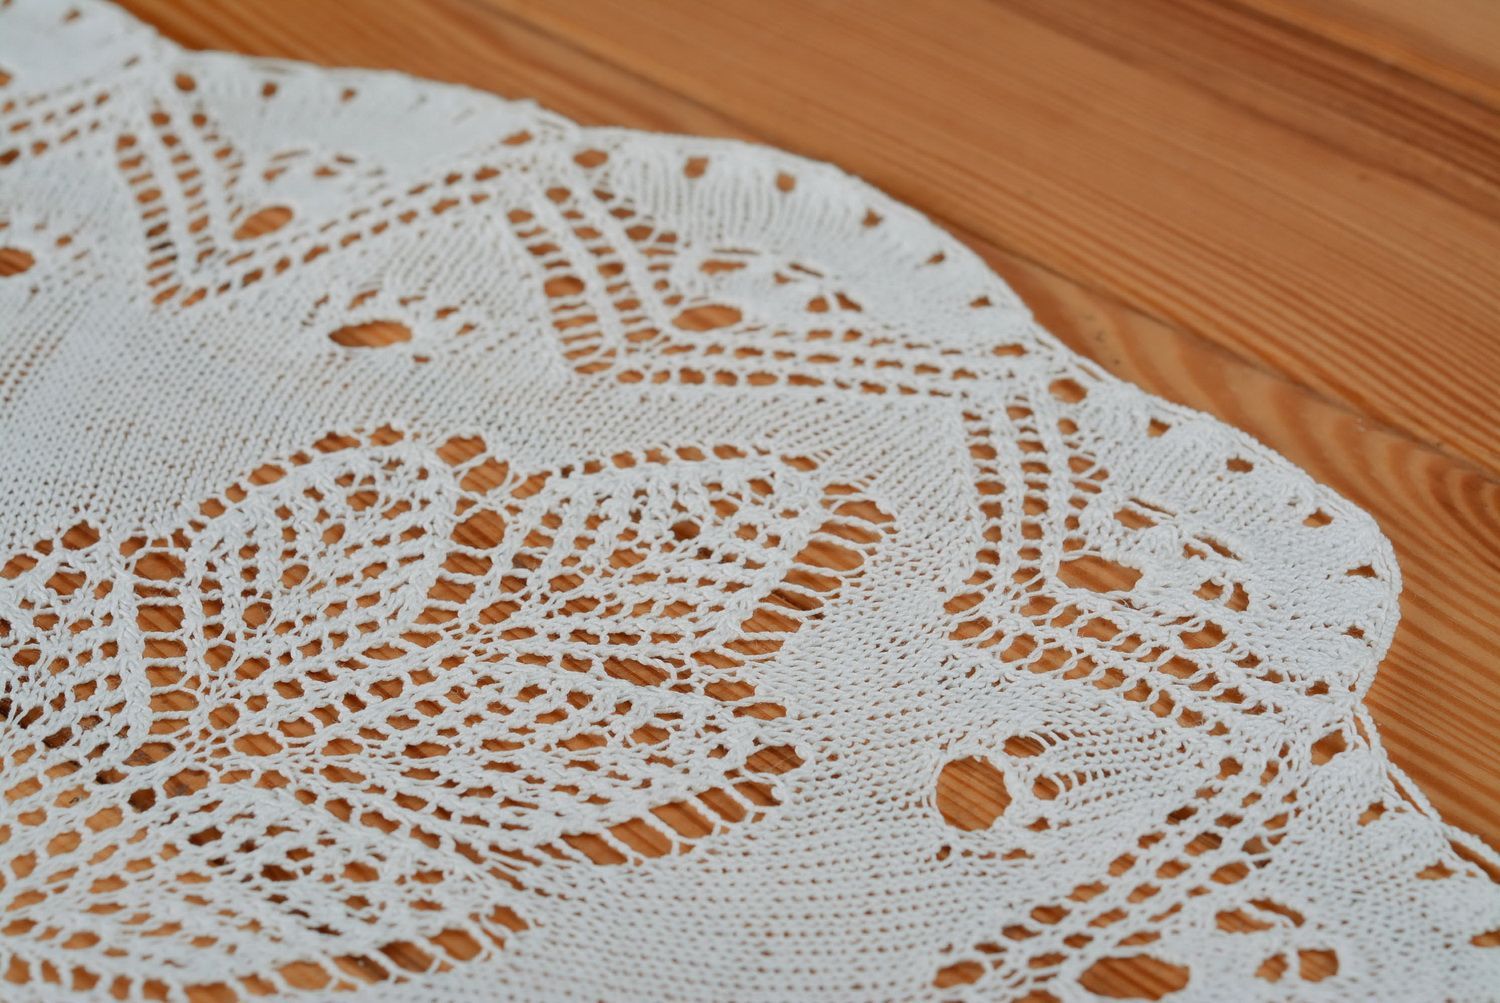 Decorative crocheted napkin photo 3